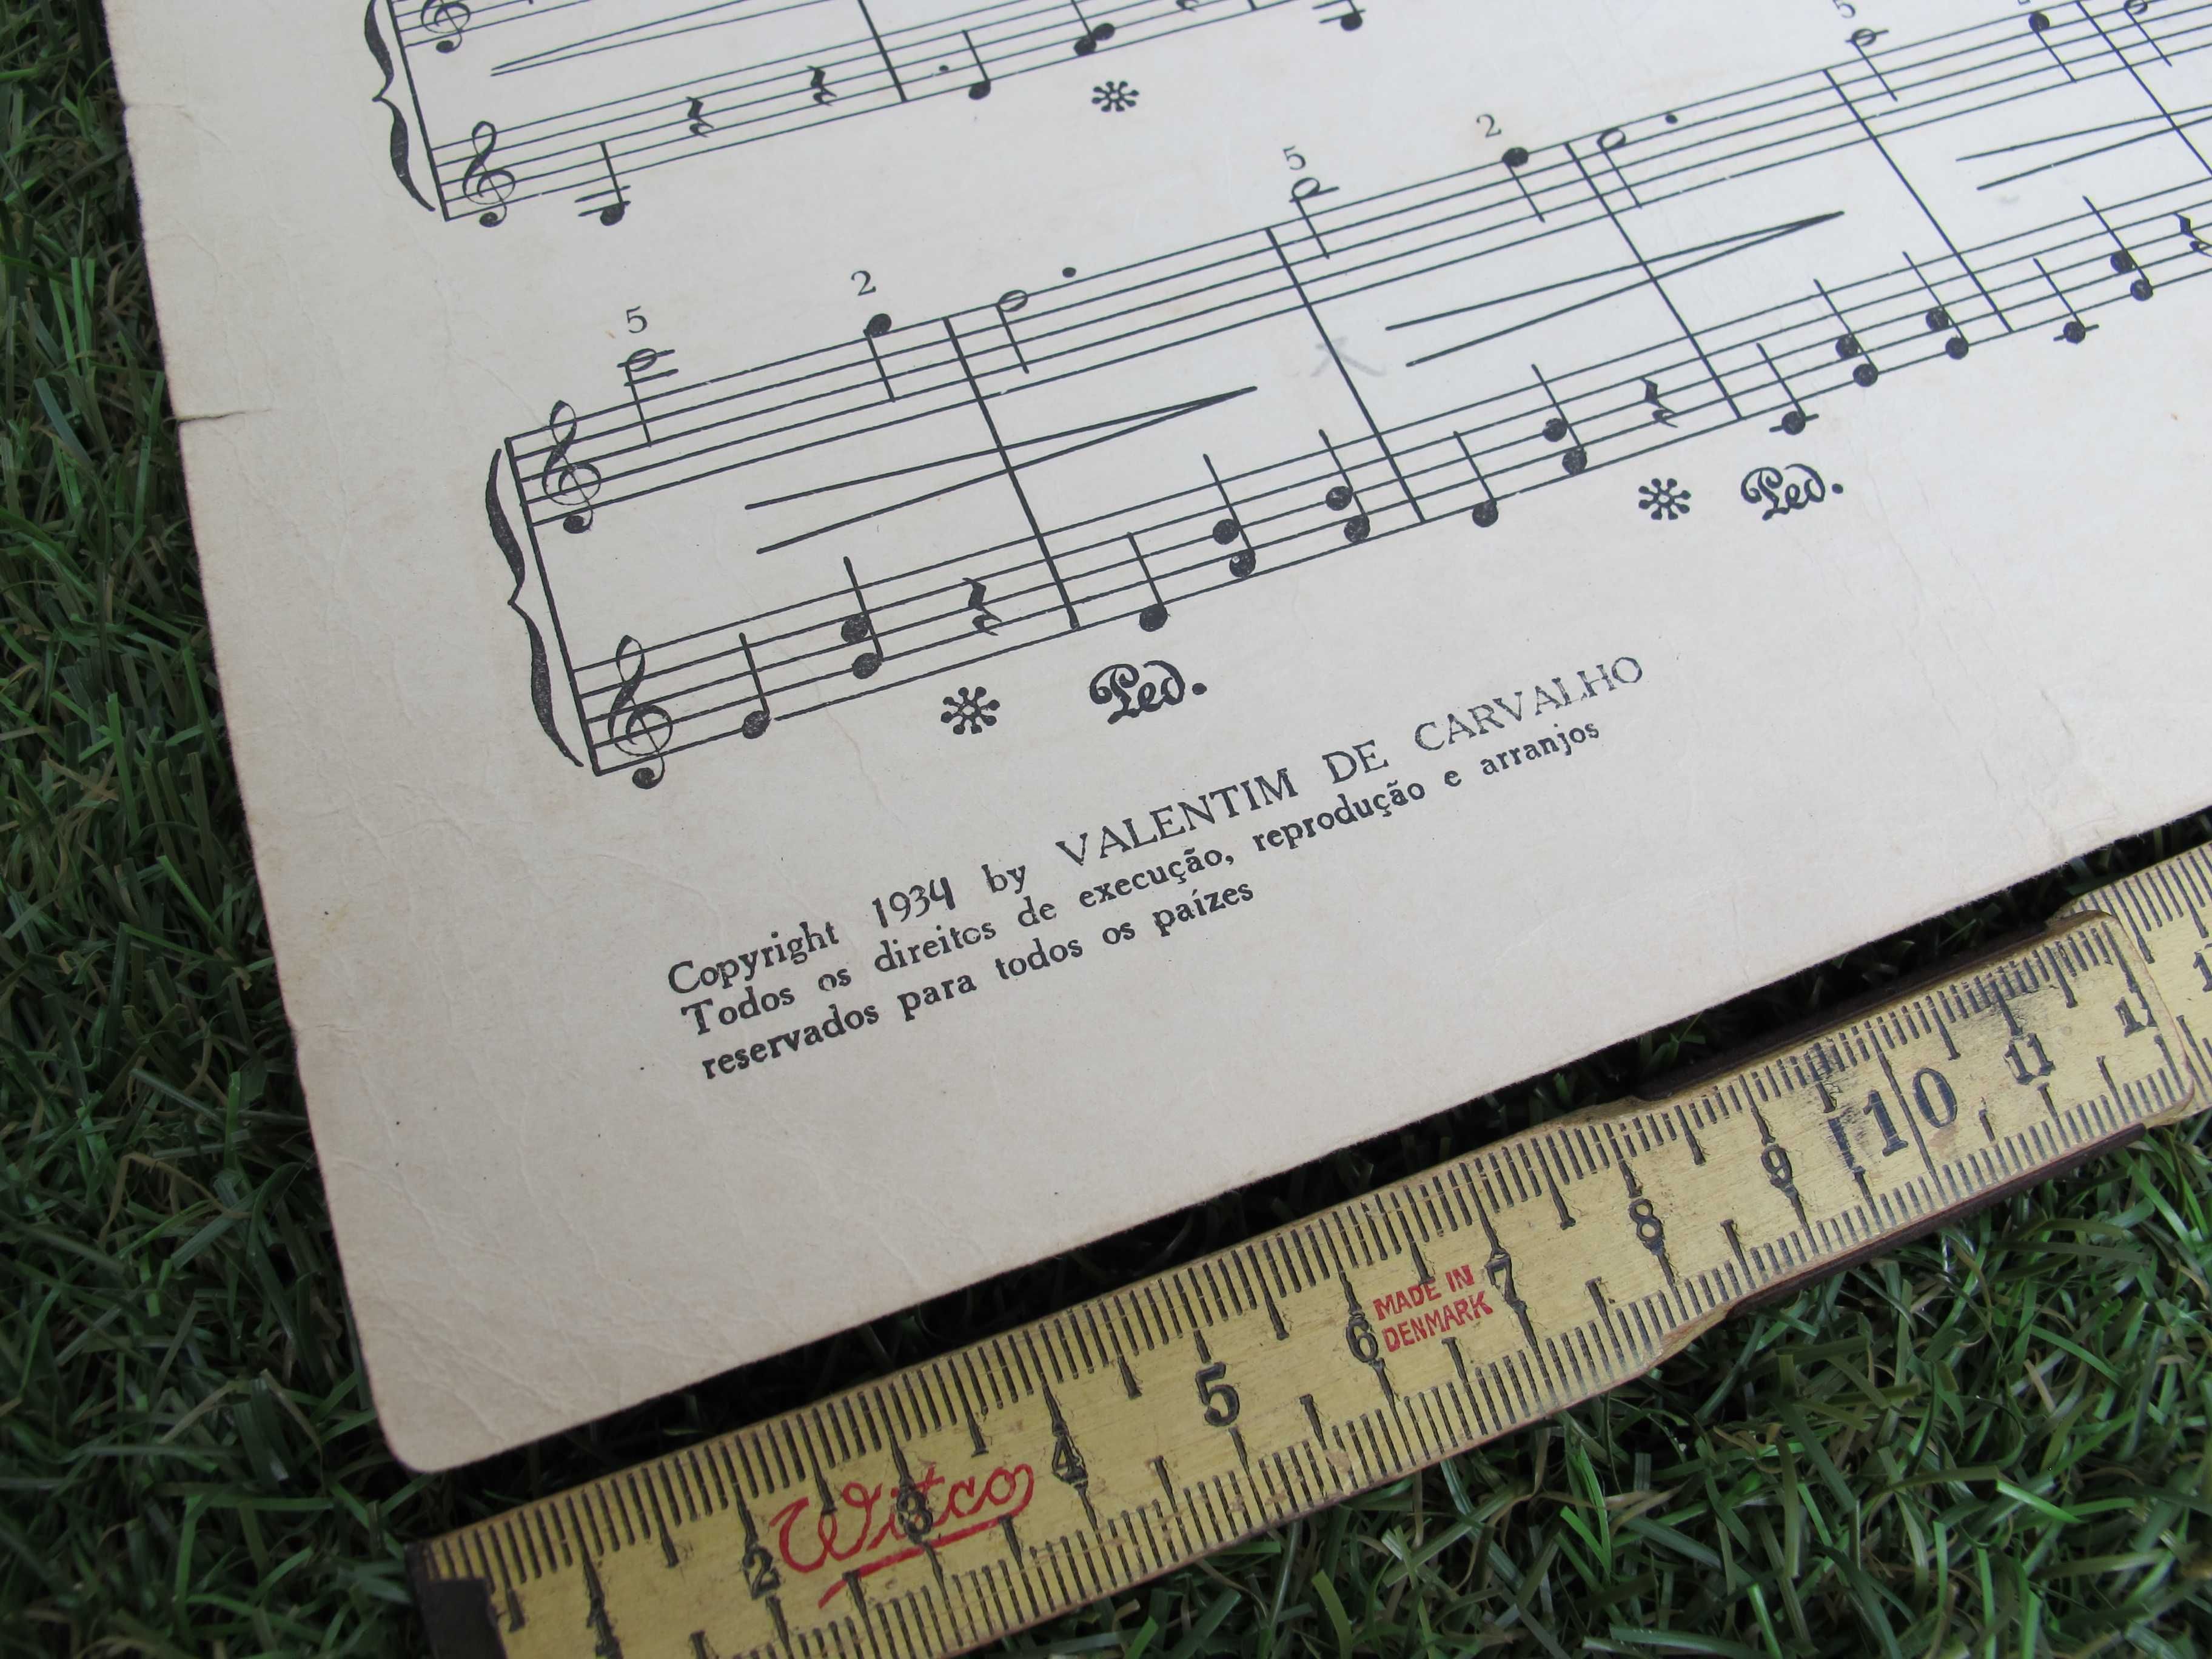 Partitura Musical Infantil Antiga - Valsa das Bonecas